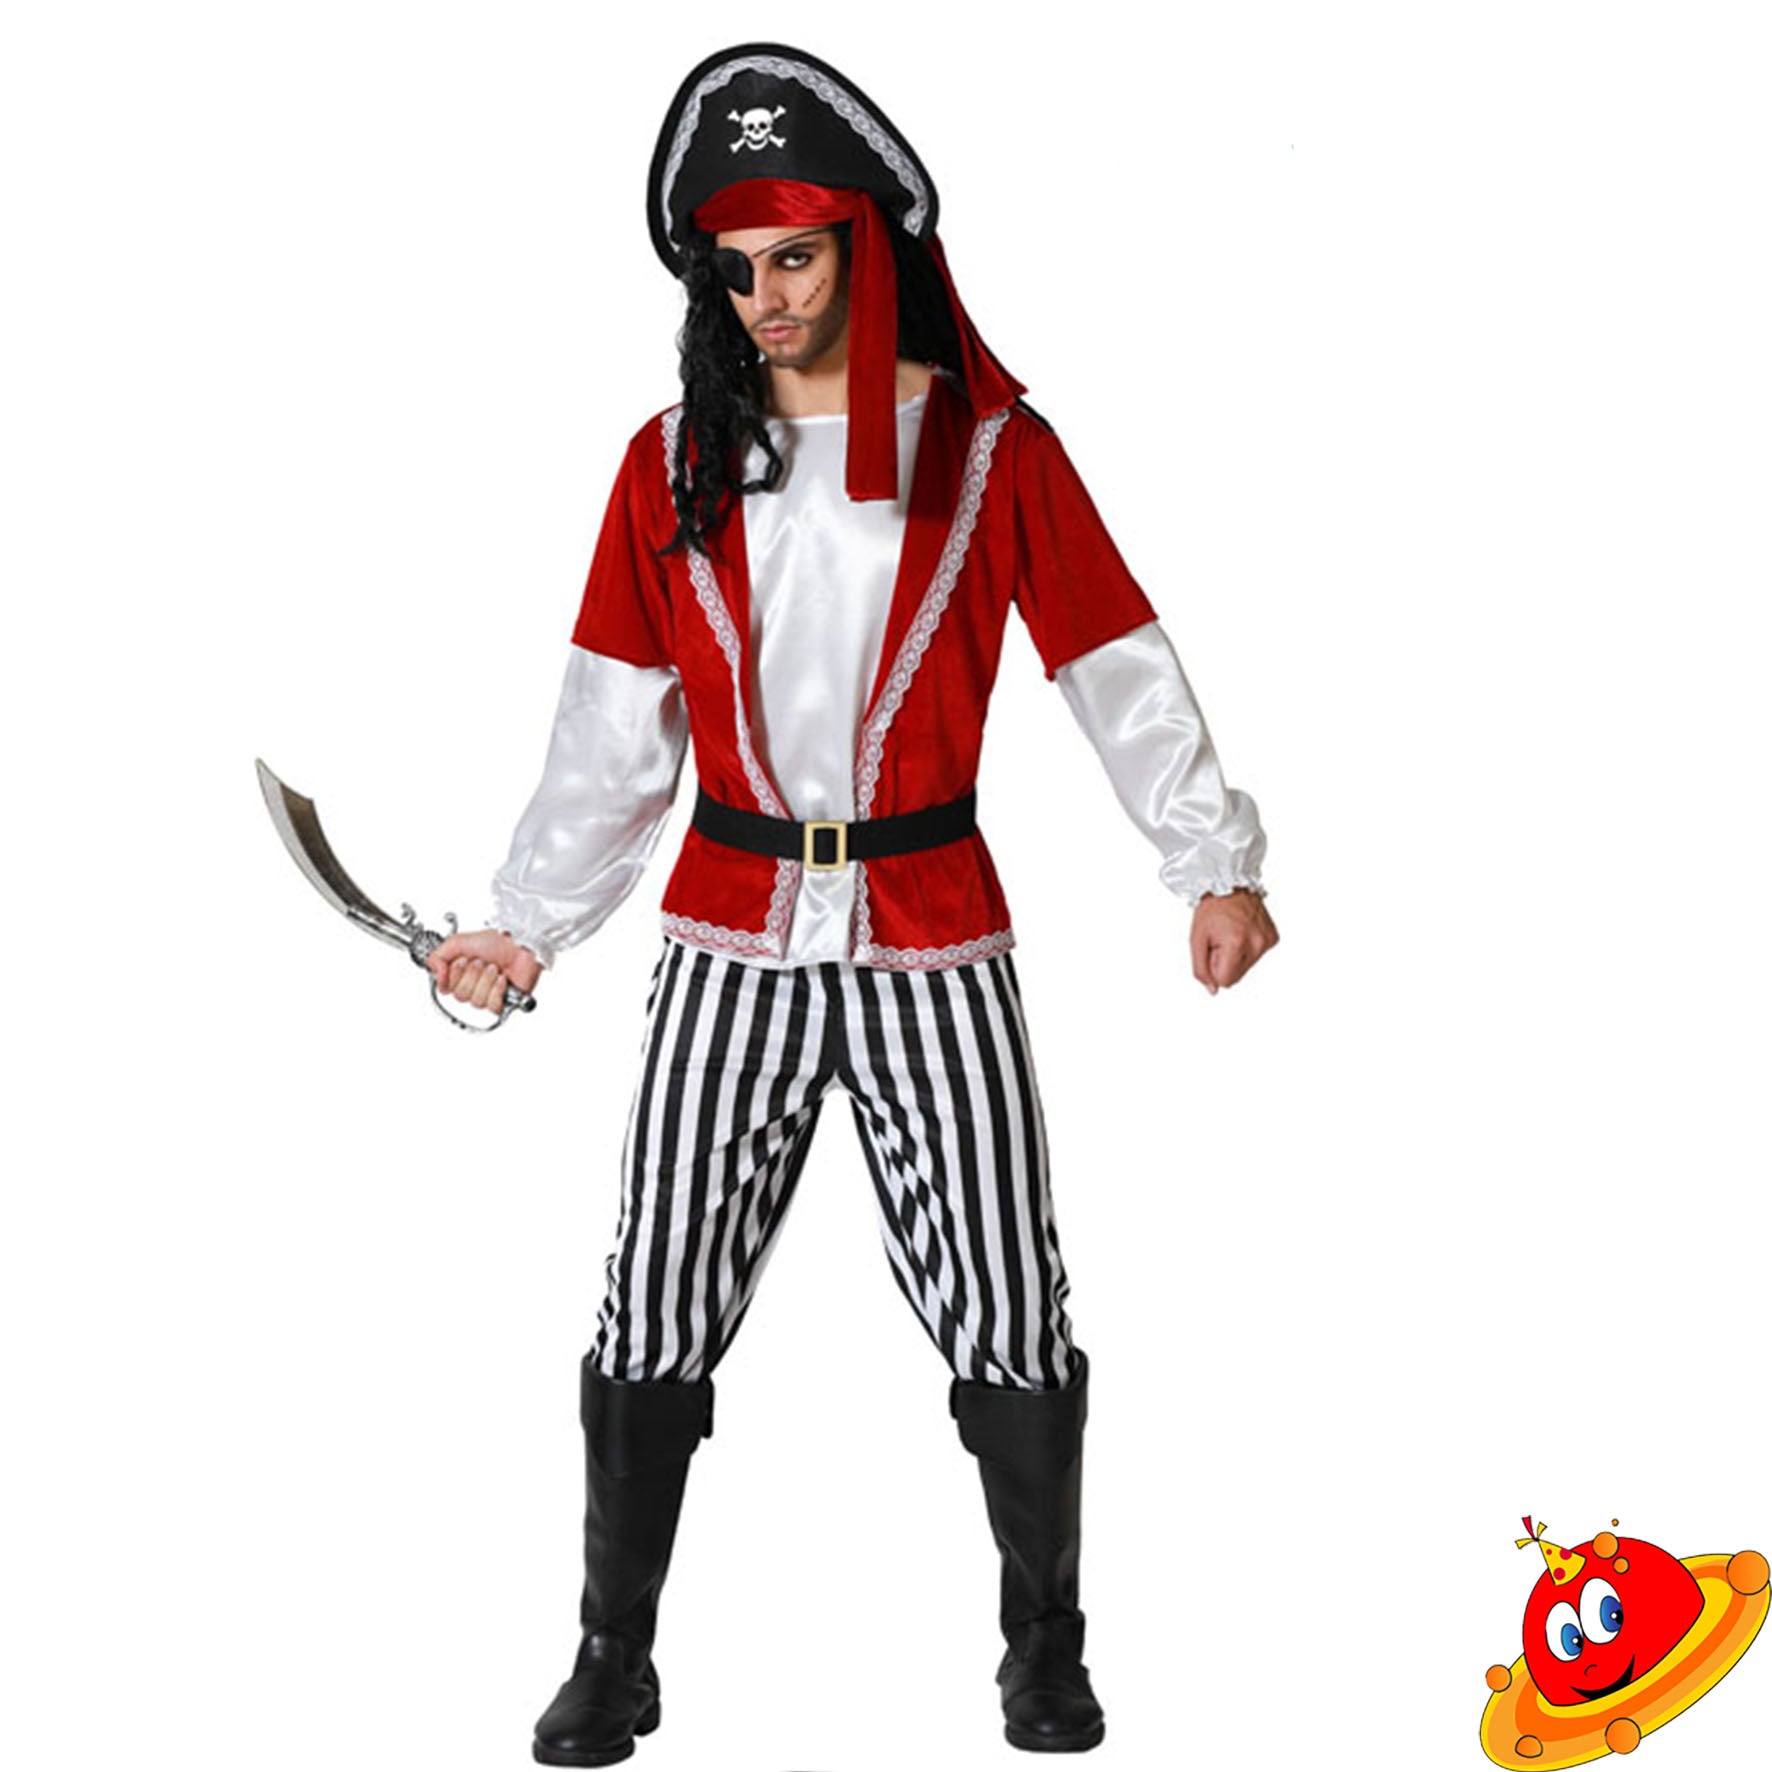 Costume Uomo Bucaniere Pirata Classic Tg 48/54